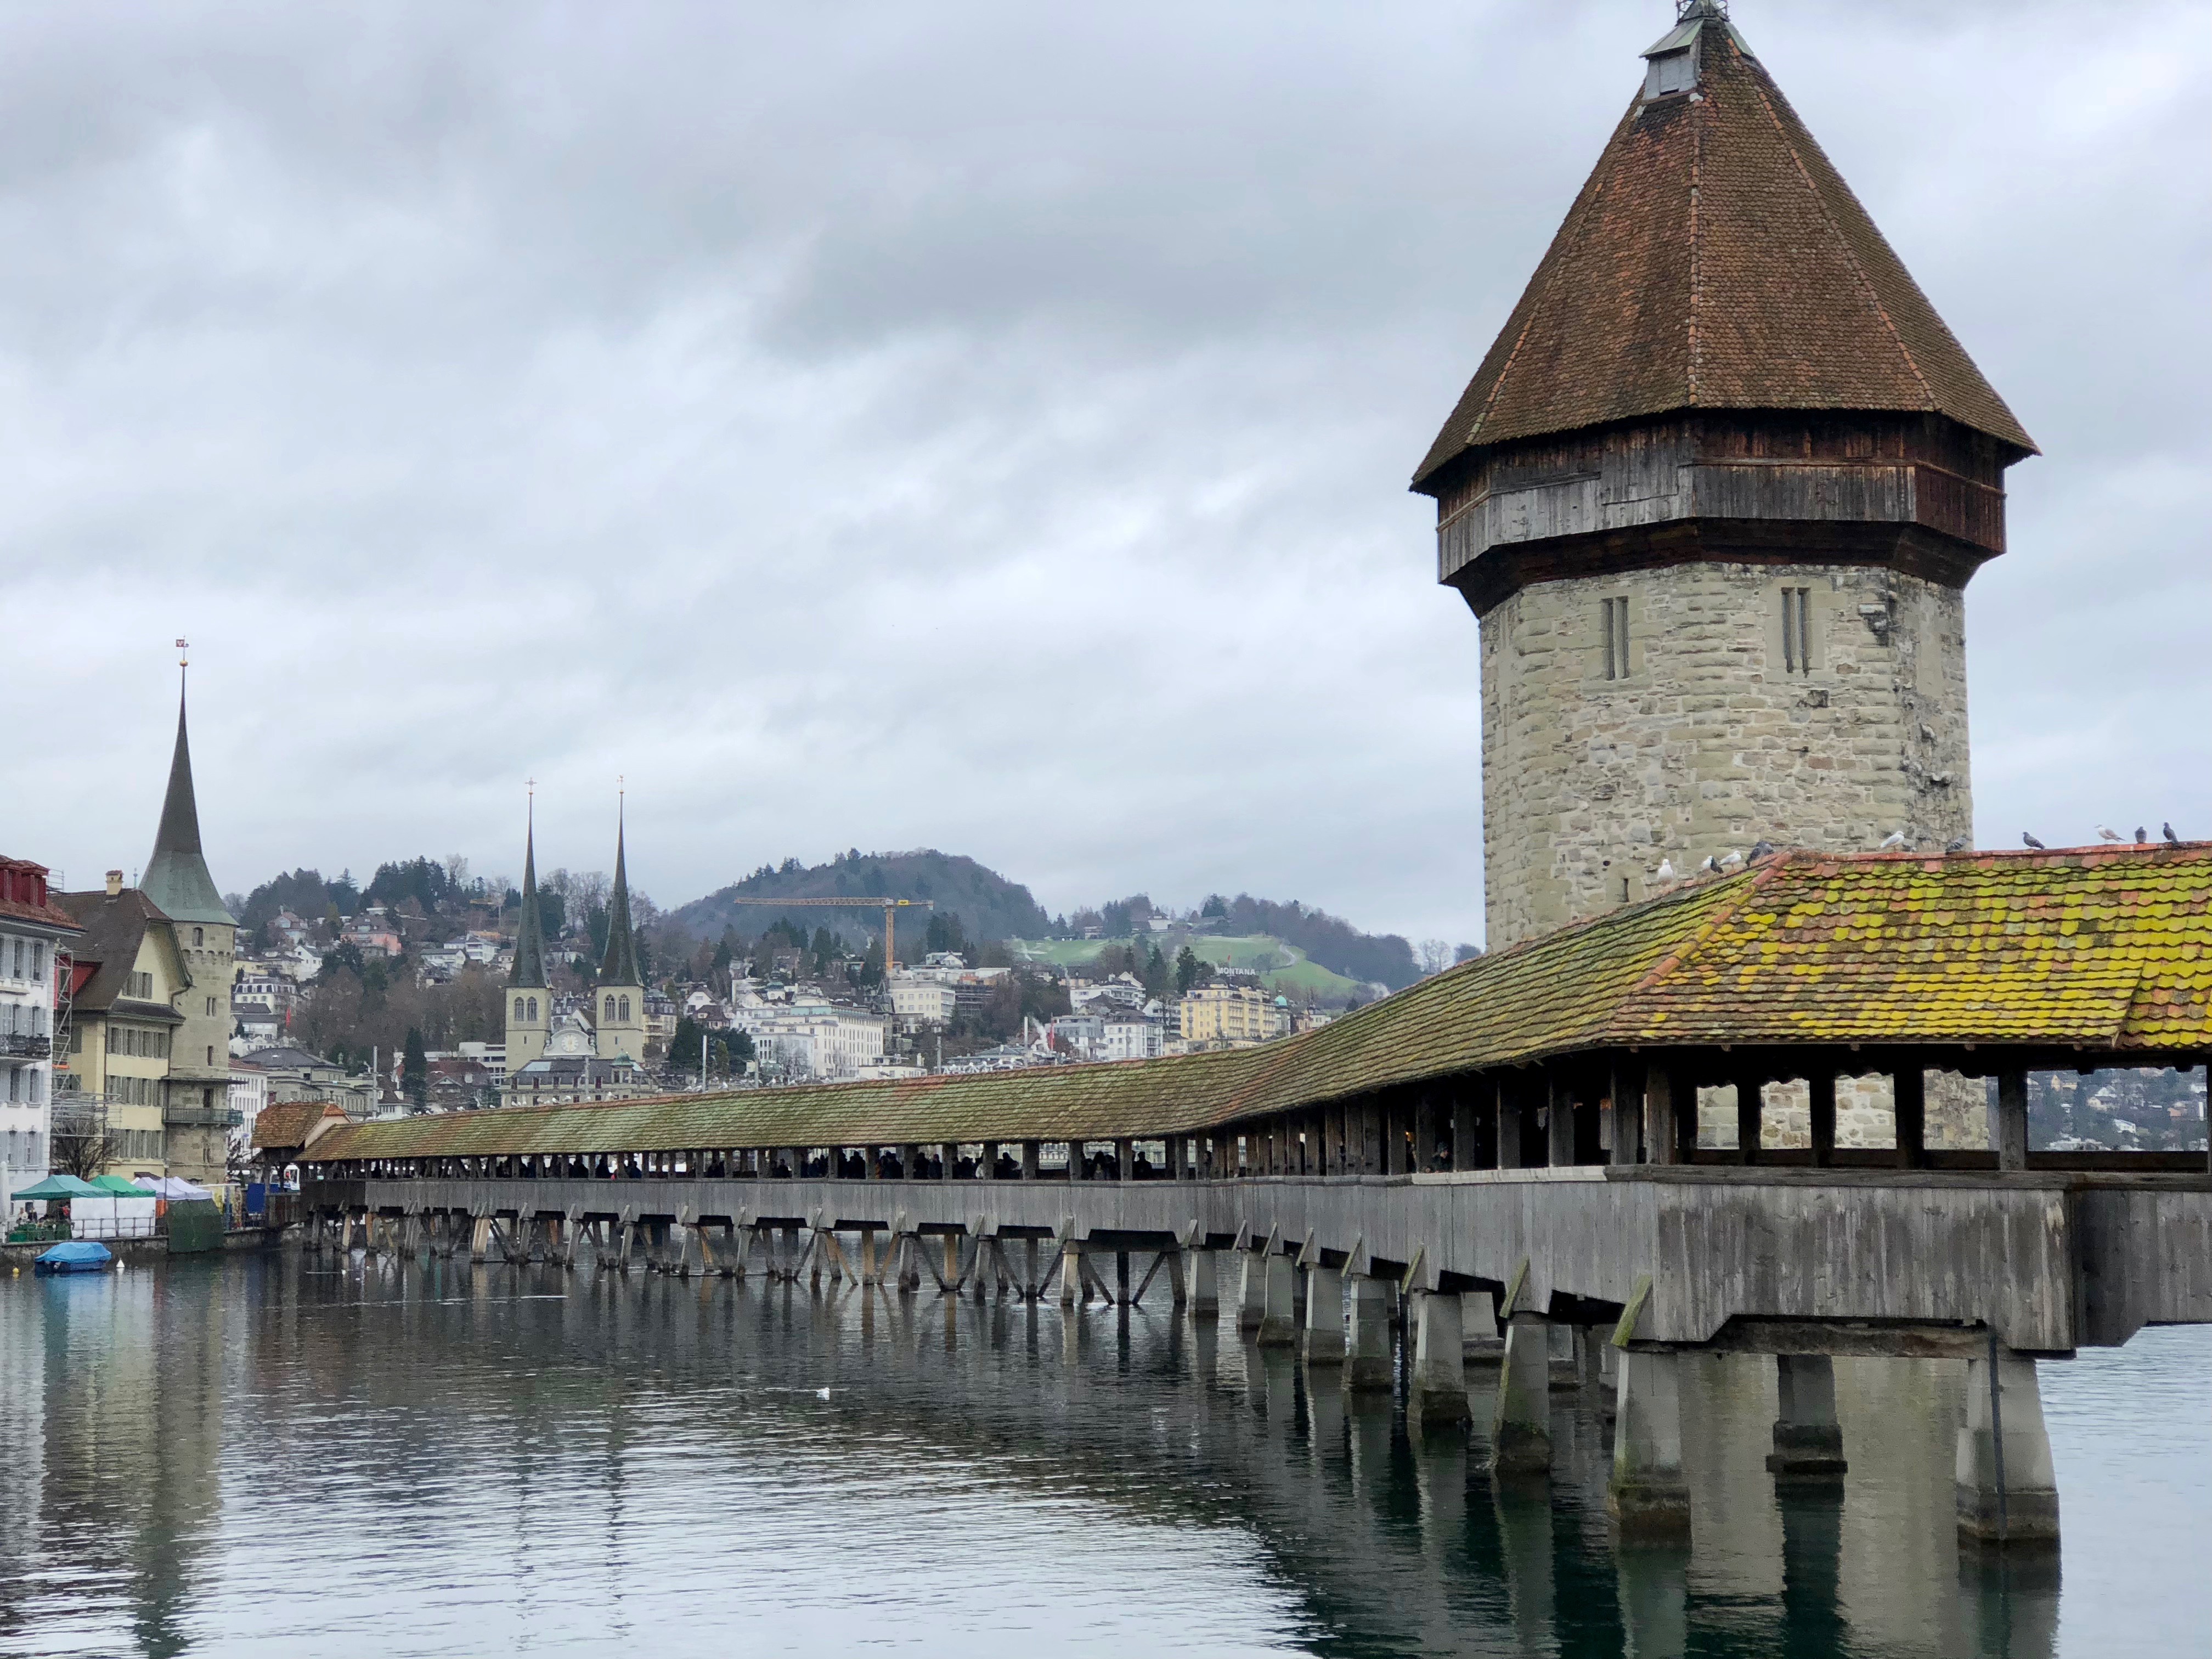 A picture of the Kapellbrücke, a wooden footbridge in Lucerne, Switzerland.